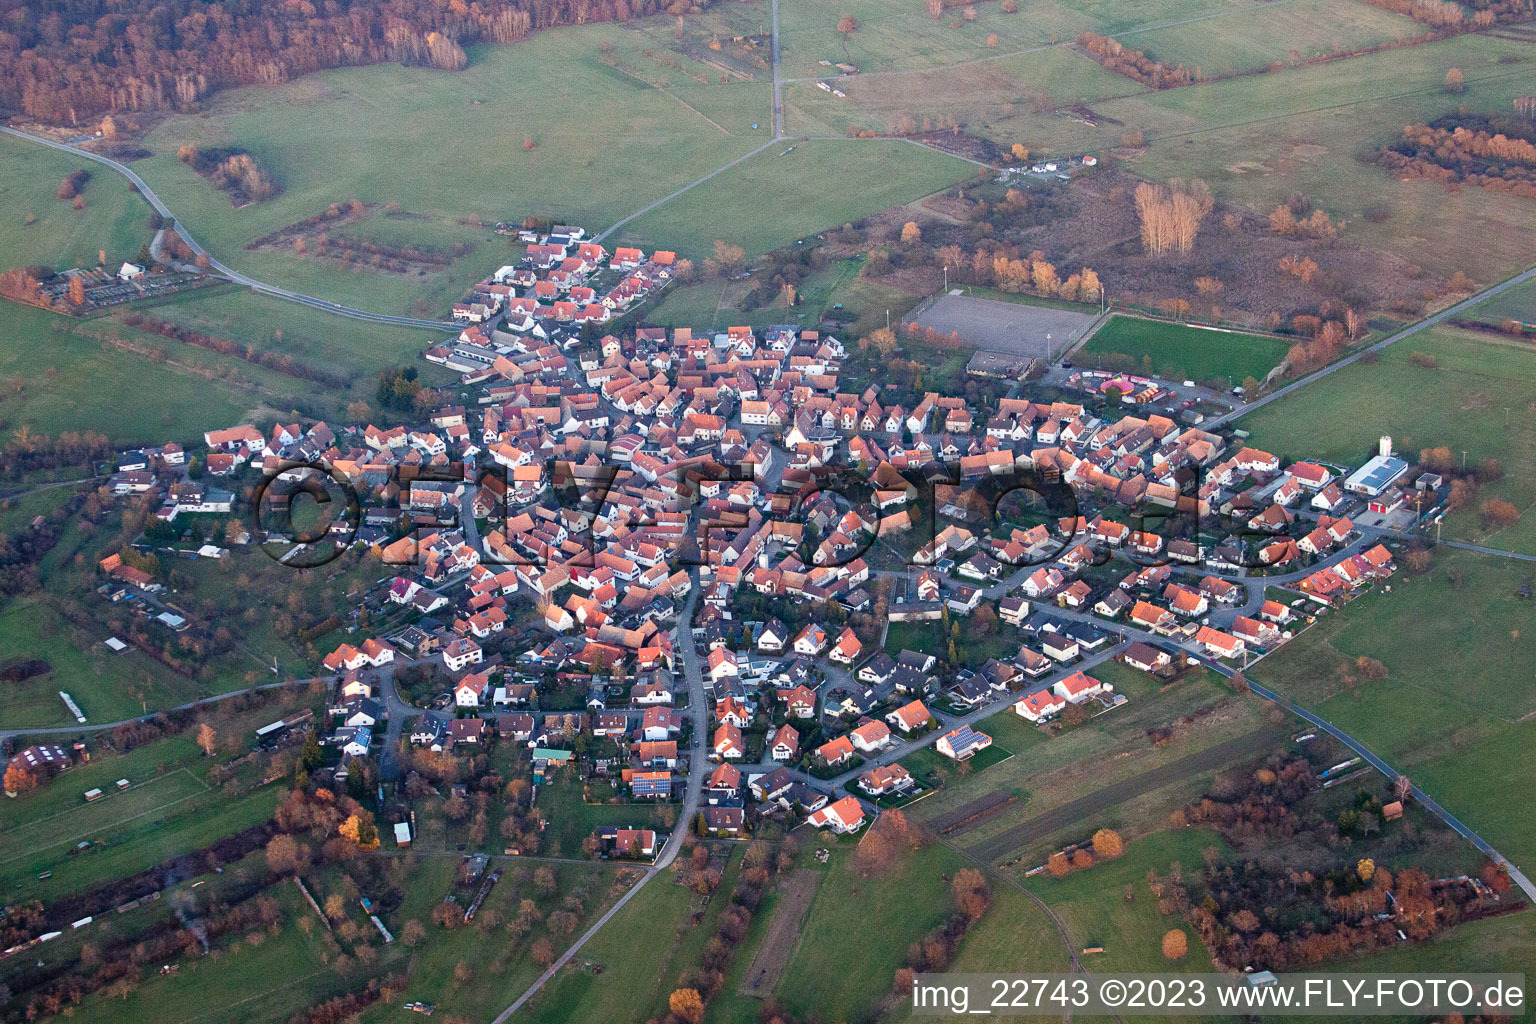 Quartier Büchelberg in Wörth am Rhein dans le département Rhénanie-Palatinat, Allemagne vu d'un drone